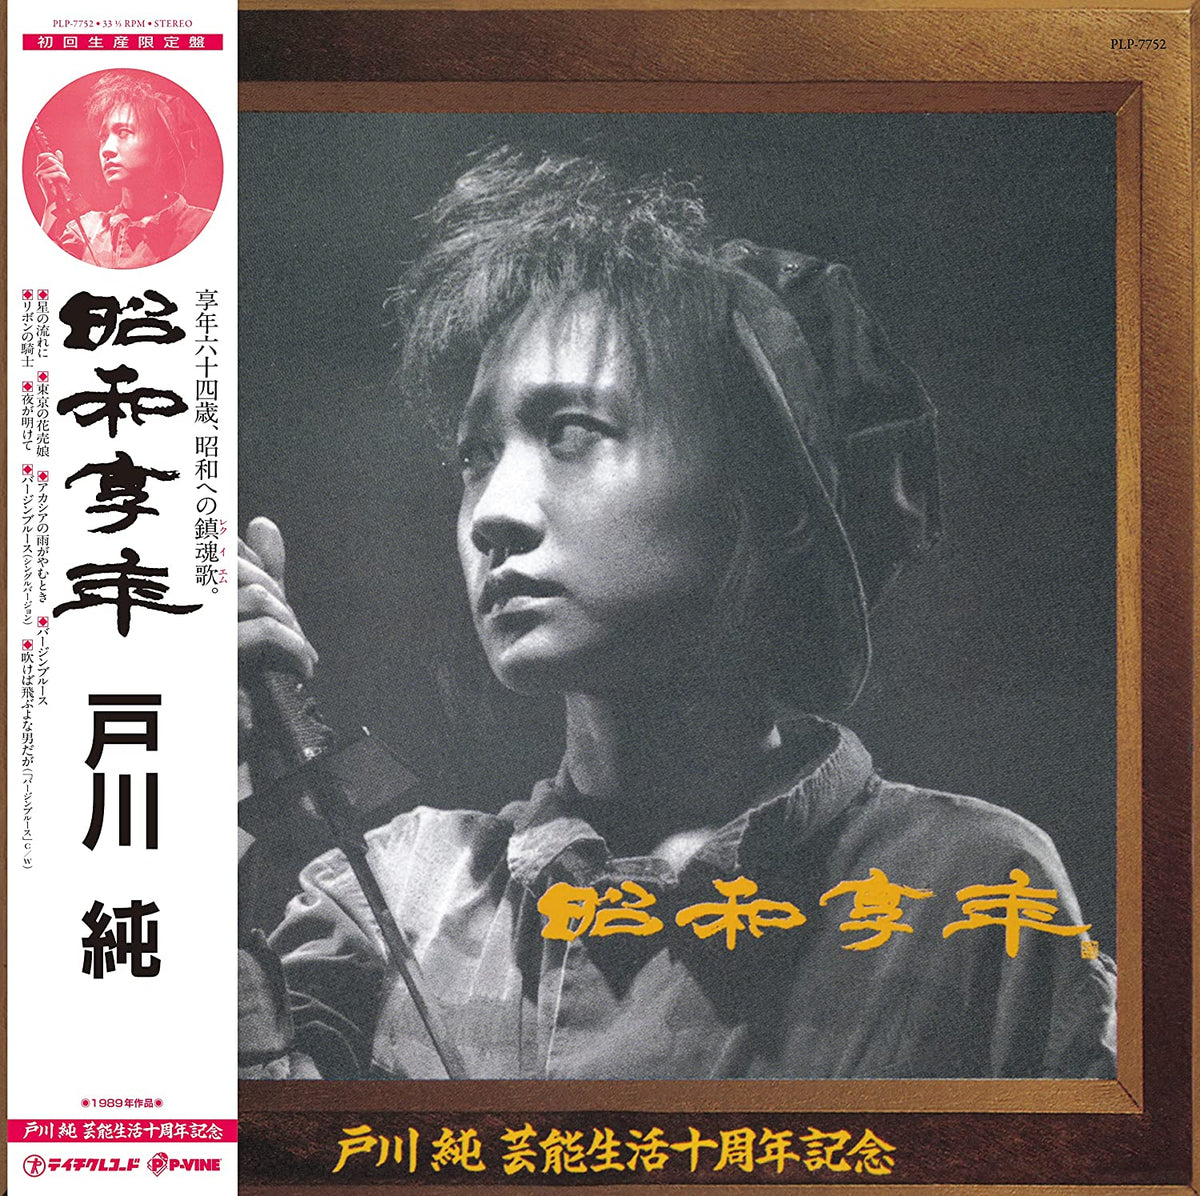 Jun Togawa (戸川純) - Showa Kyonen (昭和享年) (LP)